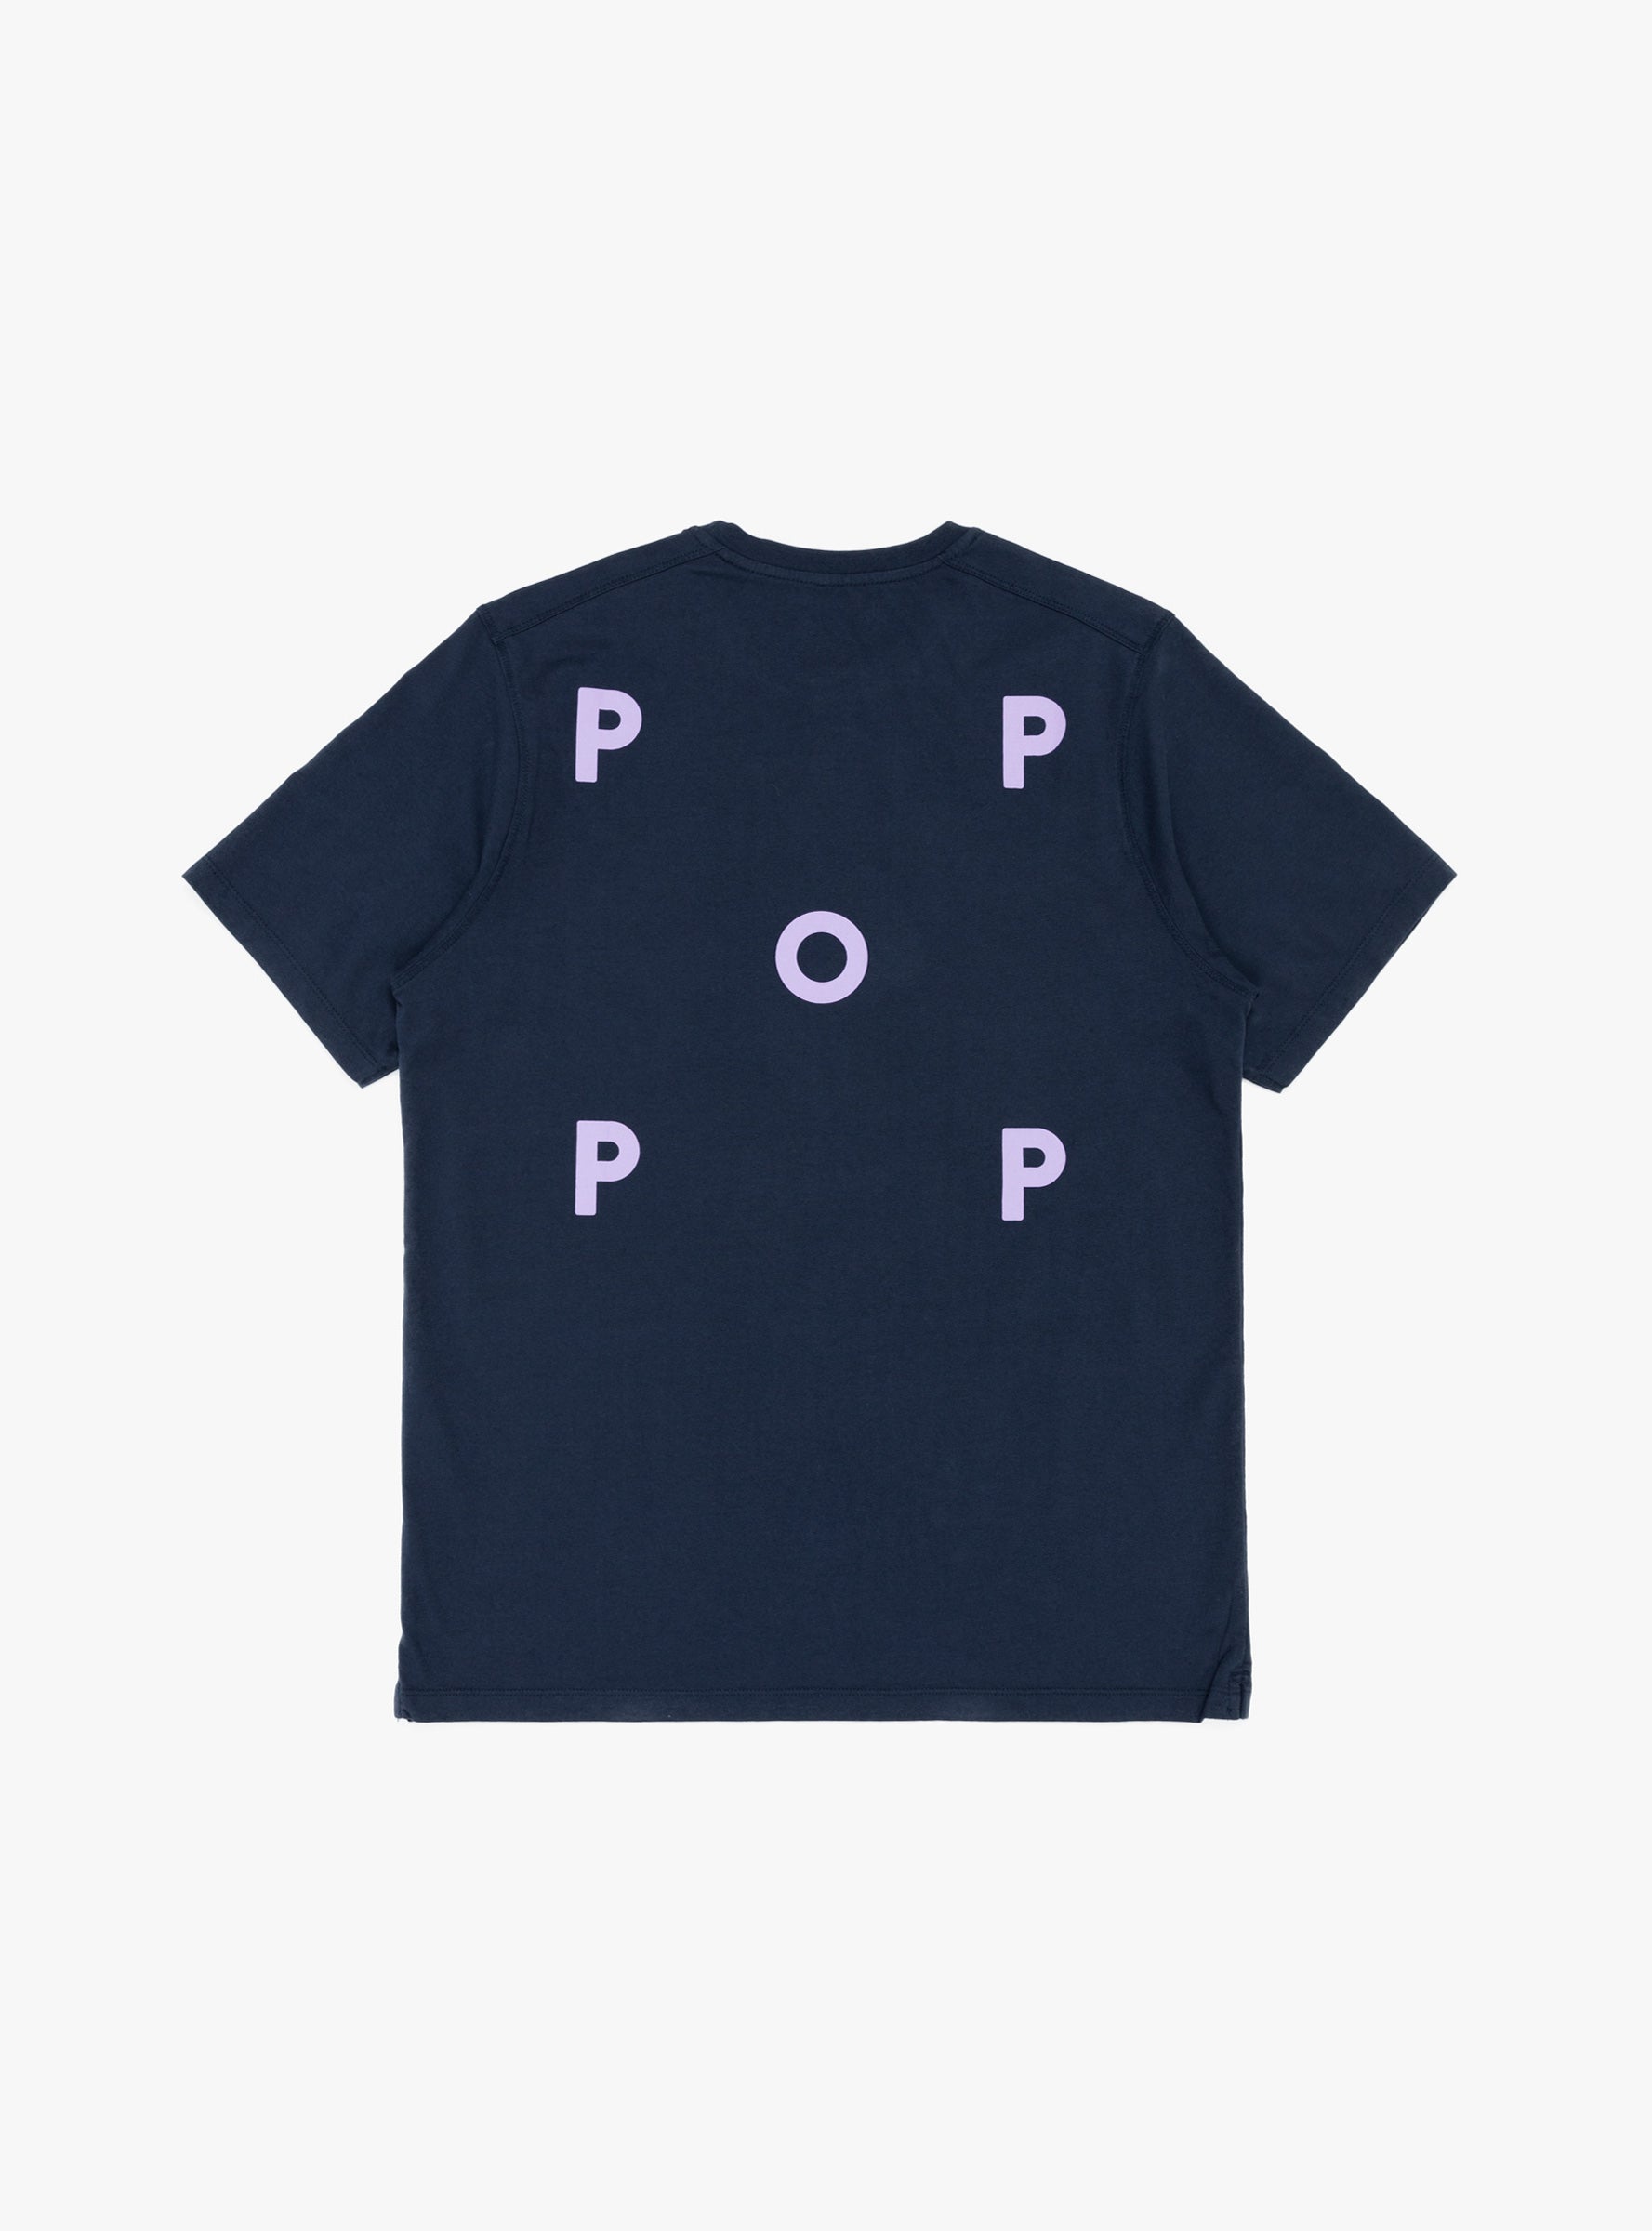 Pop Trading Company Pop Trading Company Logo T-shirt Navy & Viola - Size: Large